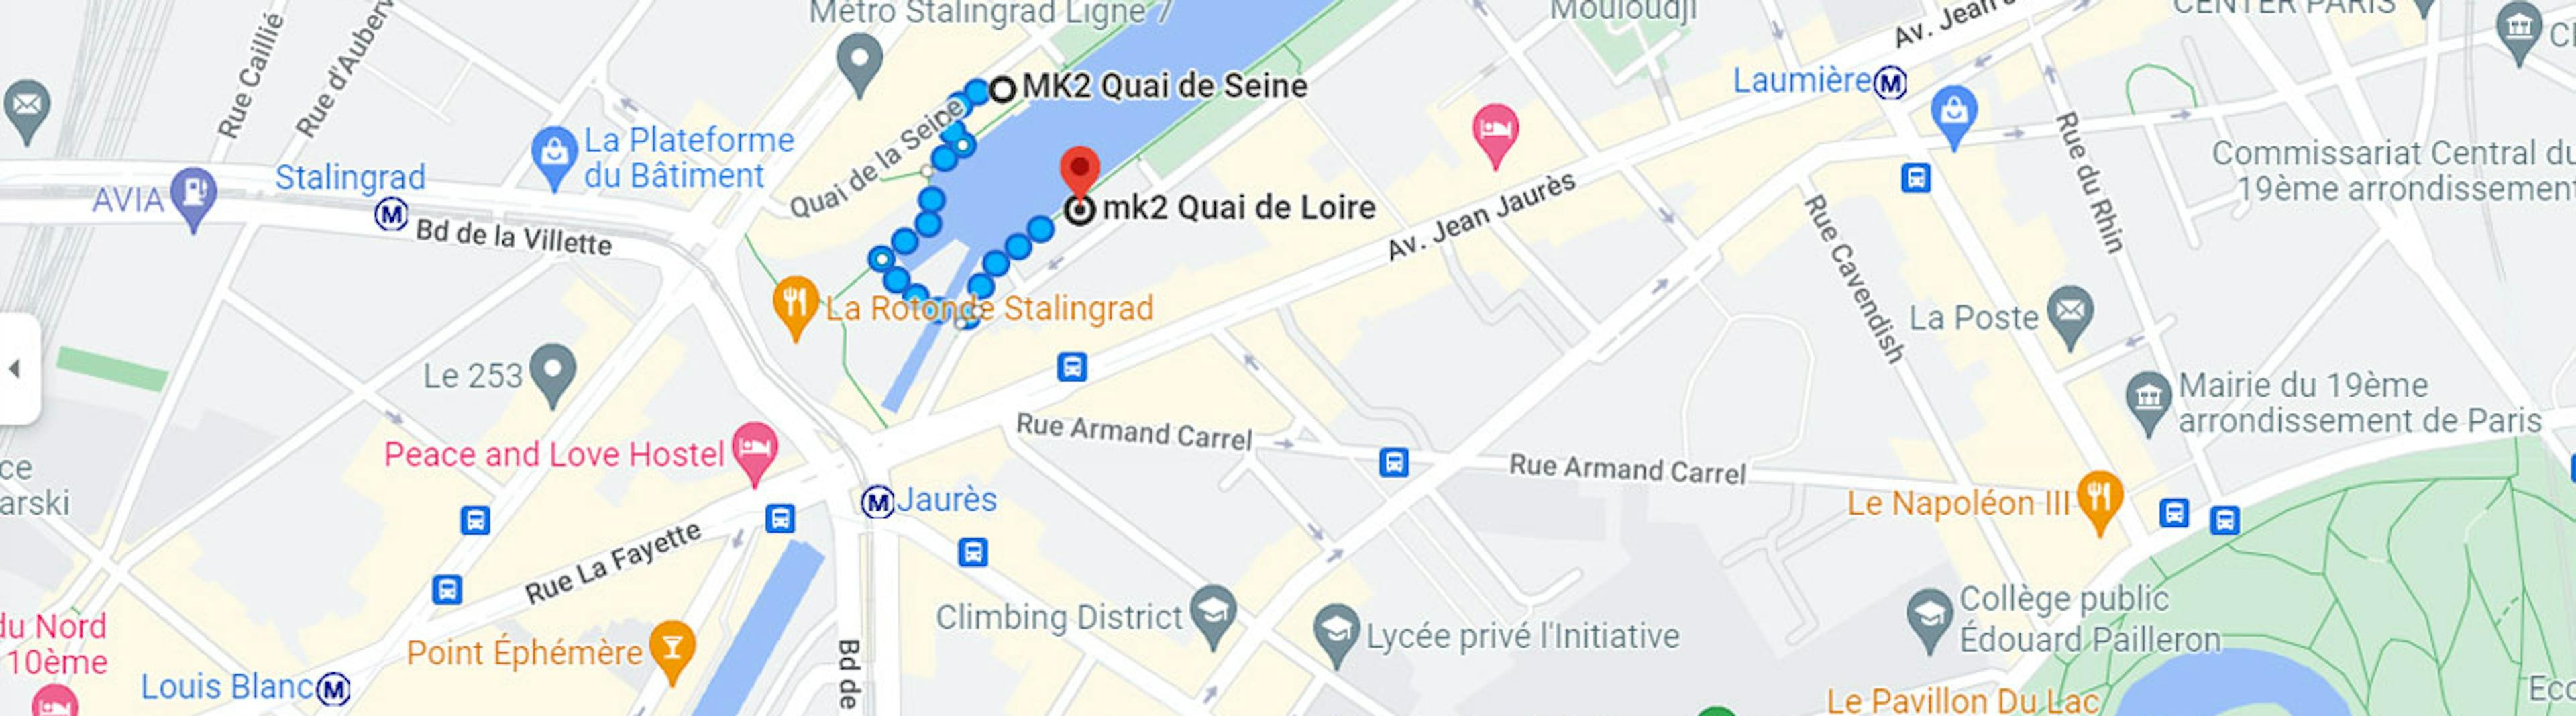 Carte d'accès au complexe de cinéma Quai de Seine / Quai de Loire